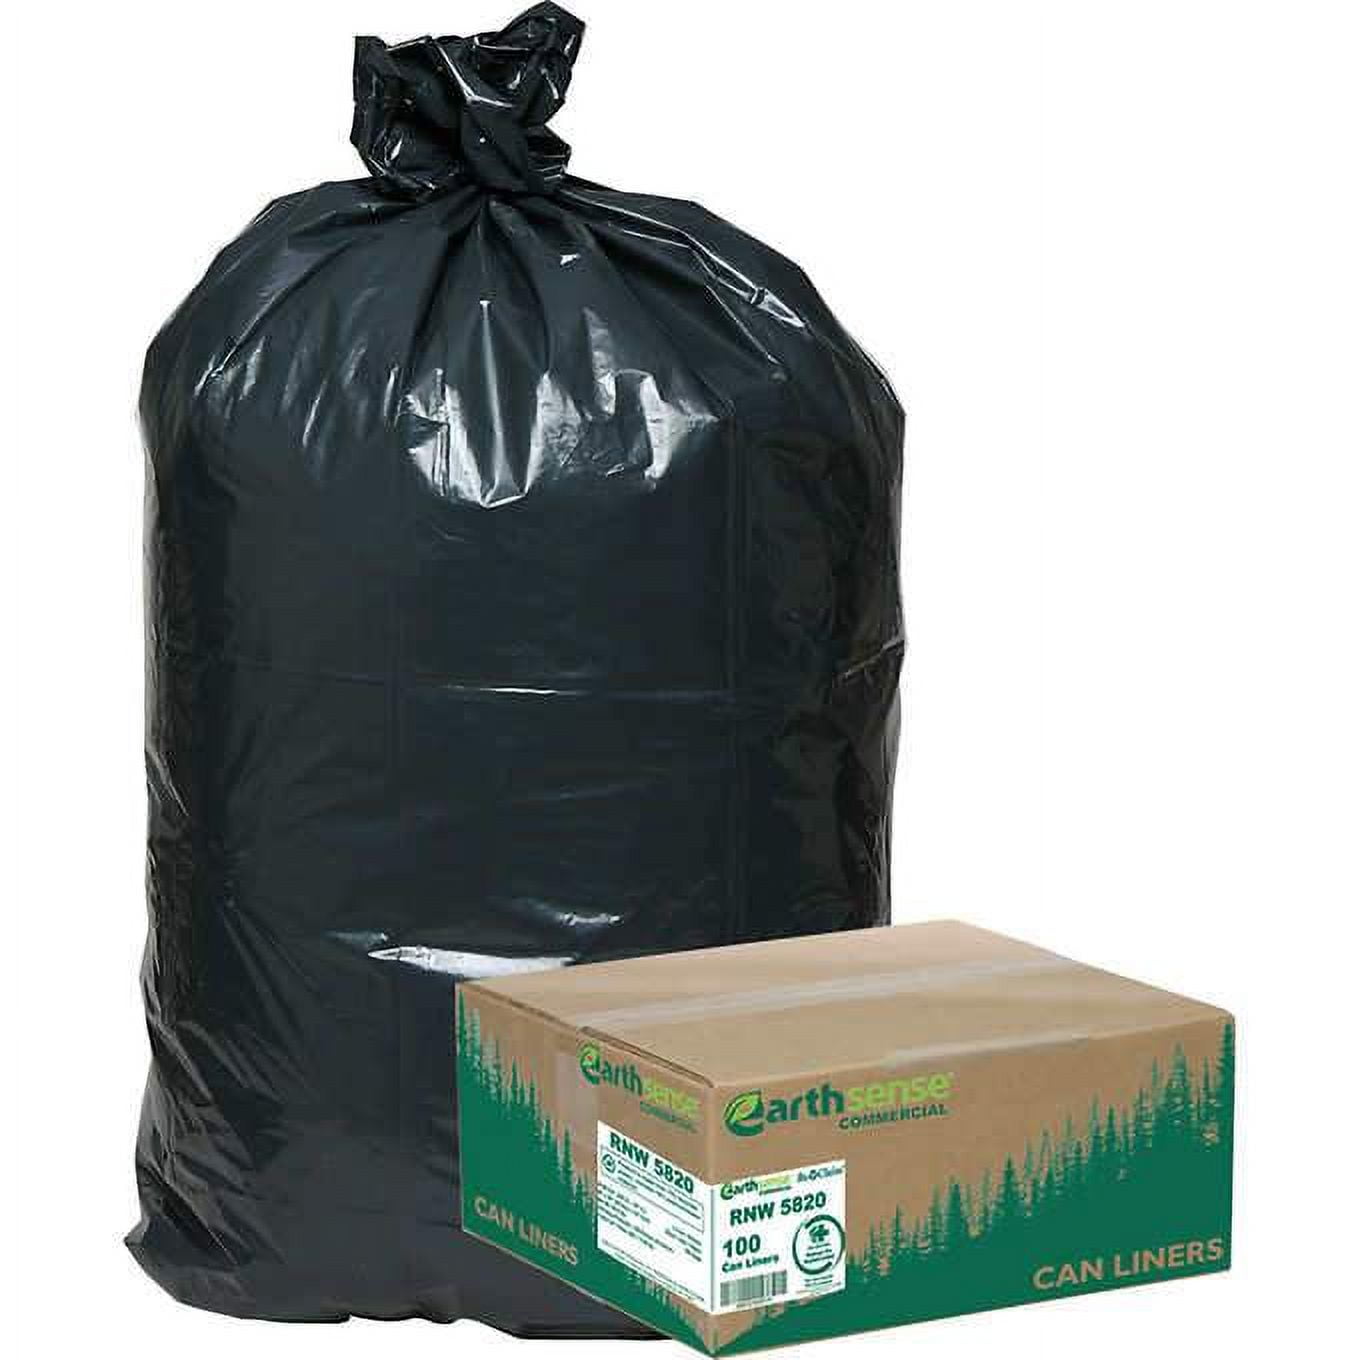 Earthsense Recycled Star Bottom Trash Bags, 55-60 gal, Black, 100-count ...